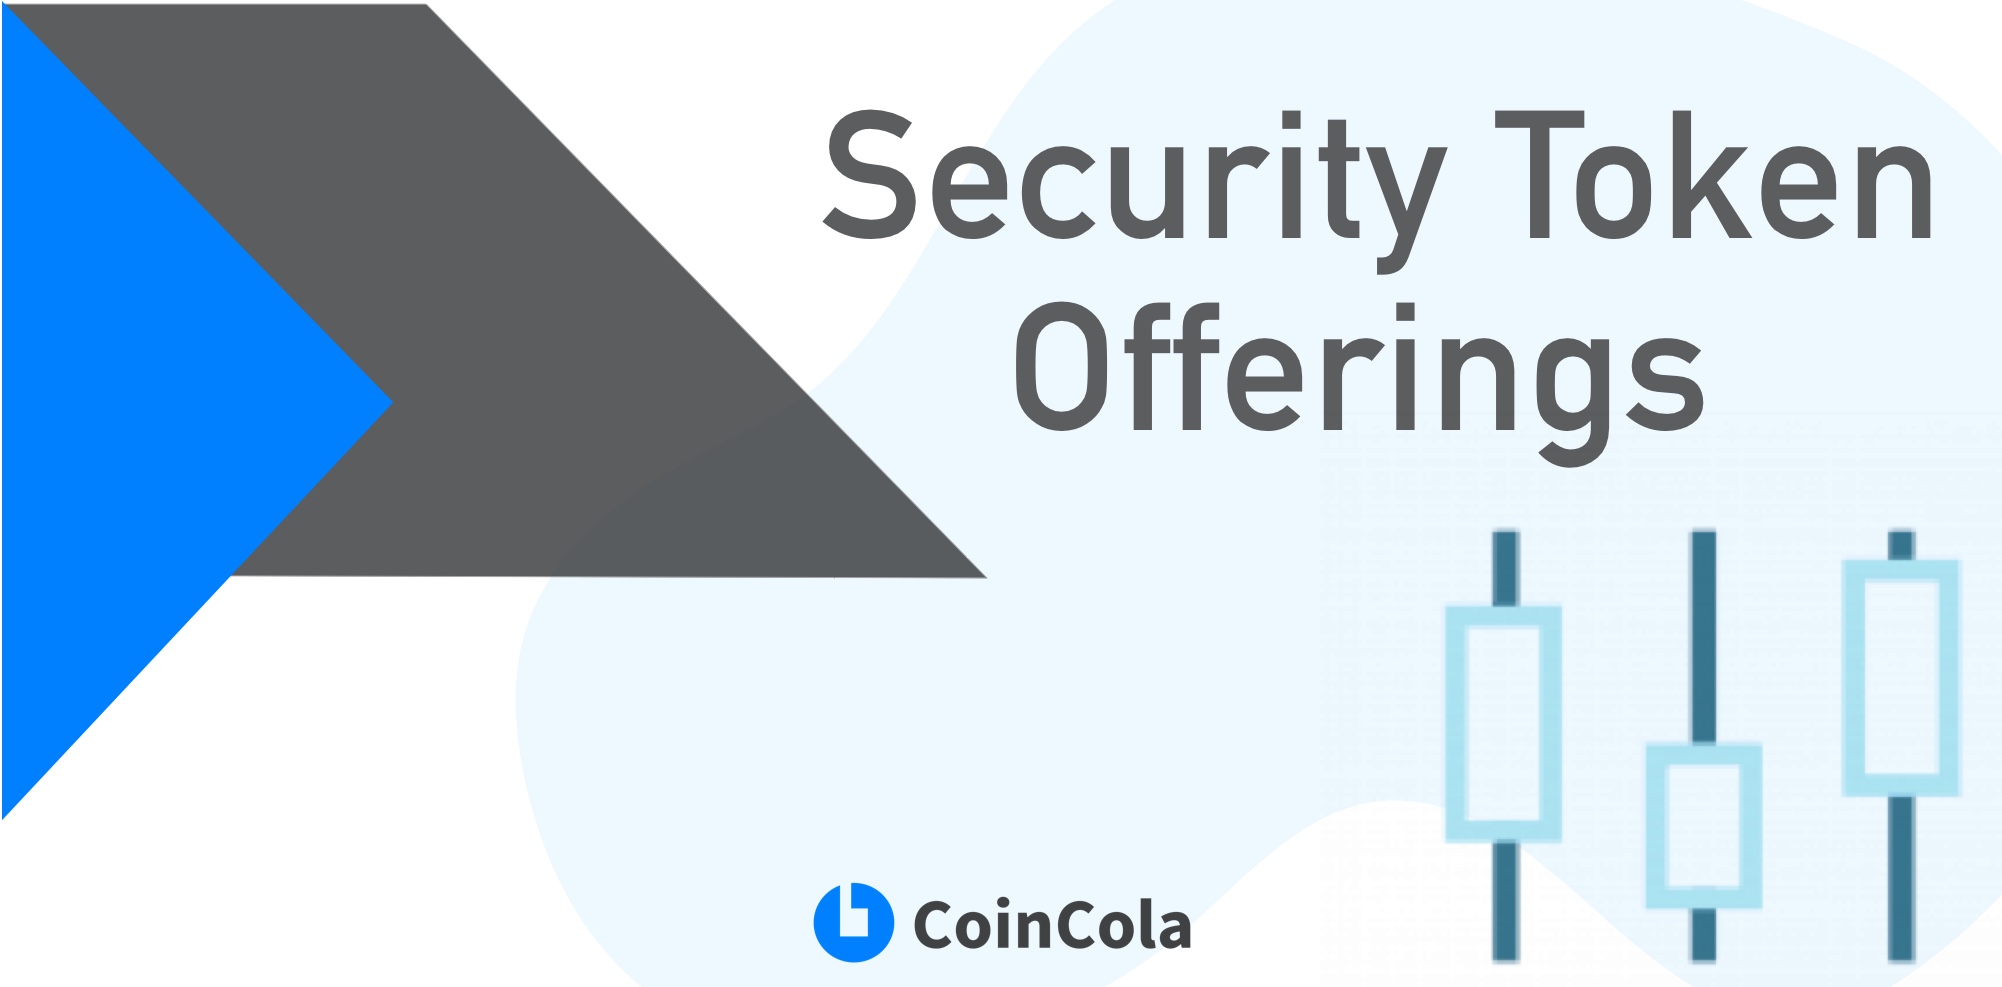 STO security token offerings